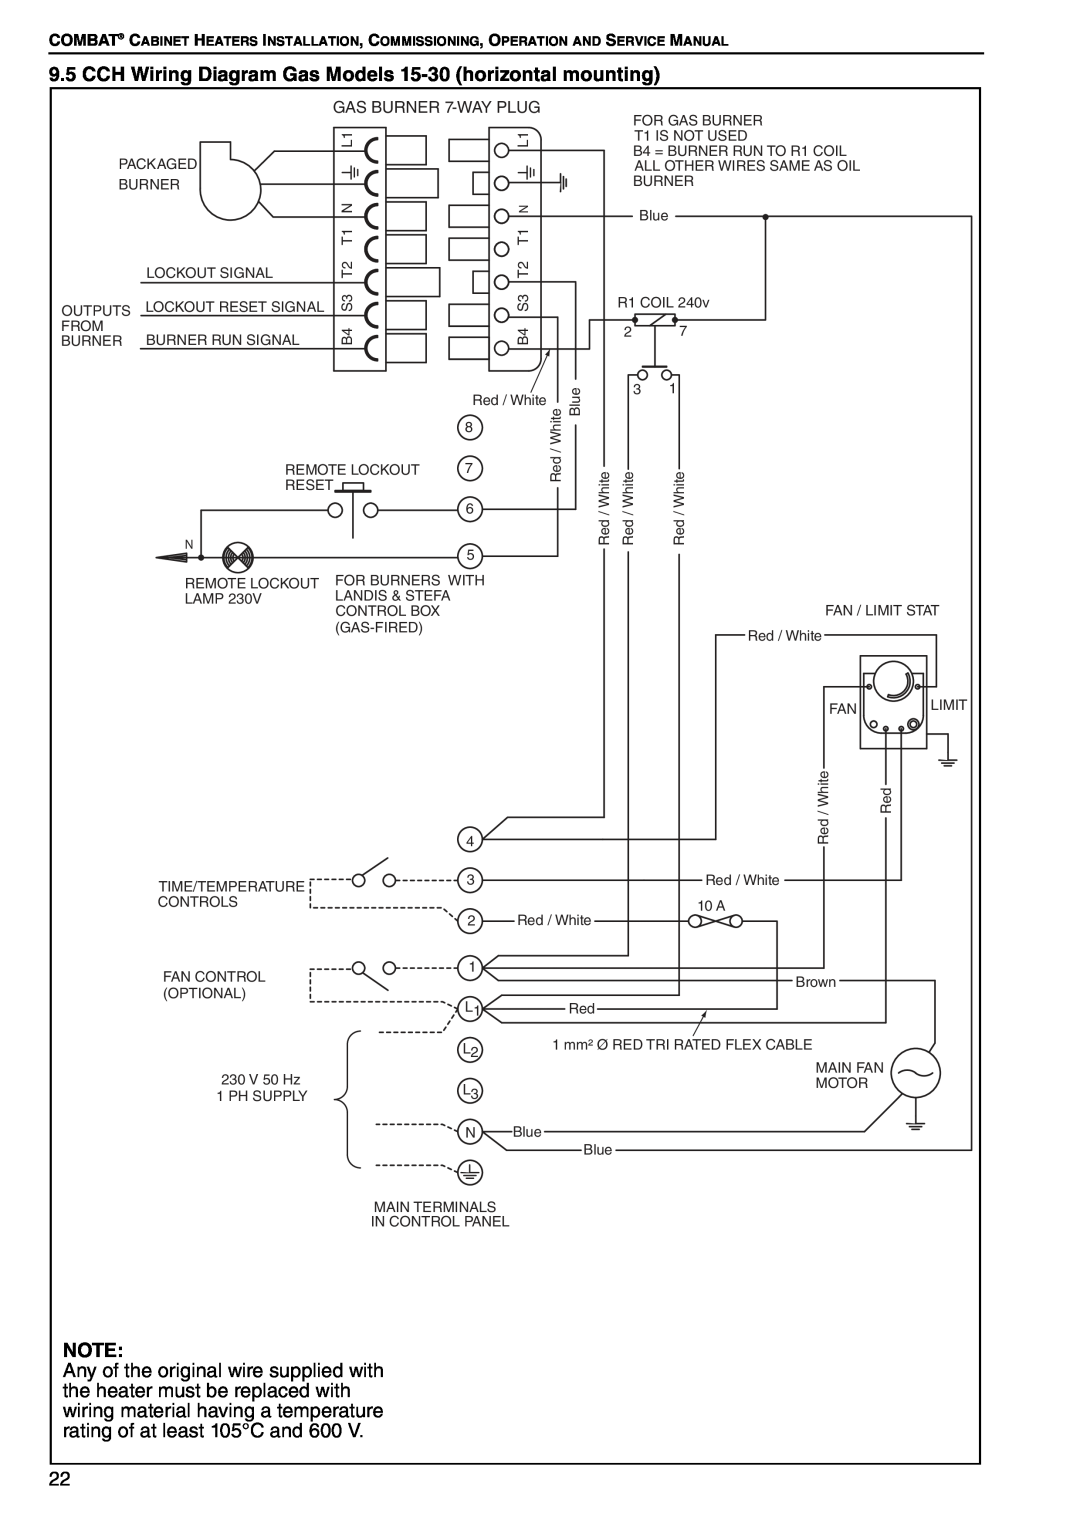 Roberts Gorden POP-ECA/PGP-ECA 015 to 0100 CCH Wiring Diagram Gas Models 15-30 horizontal mounting, GAS BURNER 7-WAY PLUG 